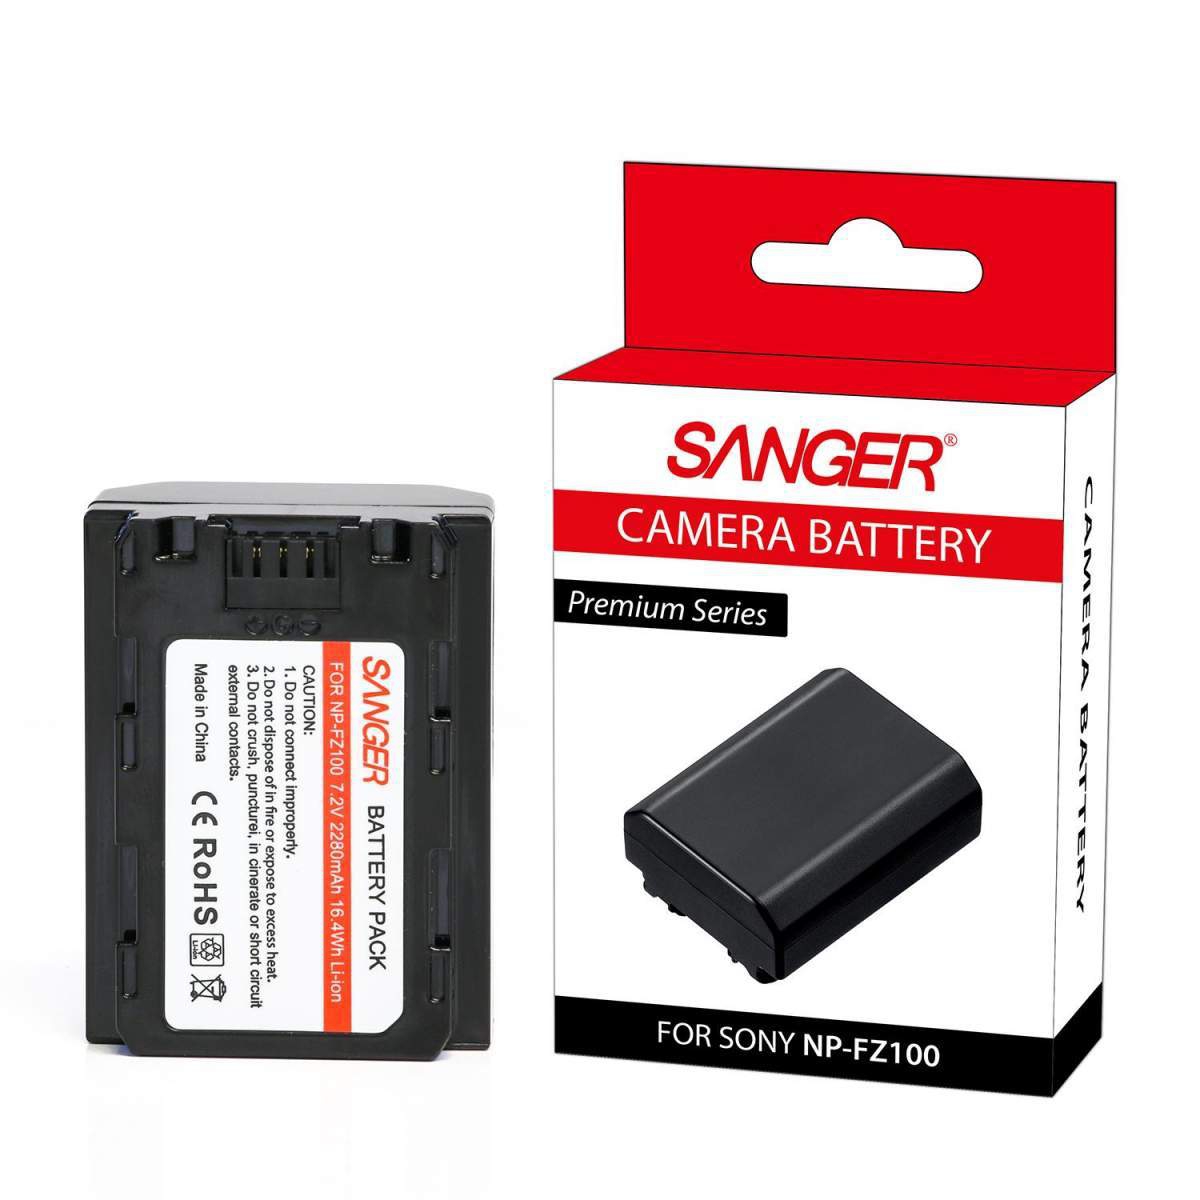 Sony A6600 Batarya Sanger NP-FZ100